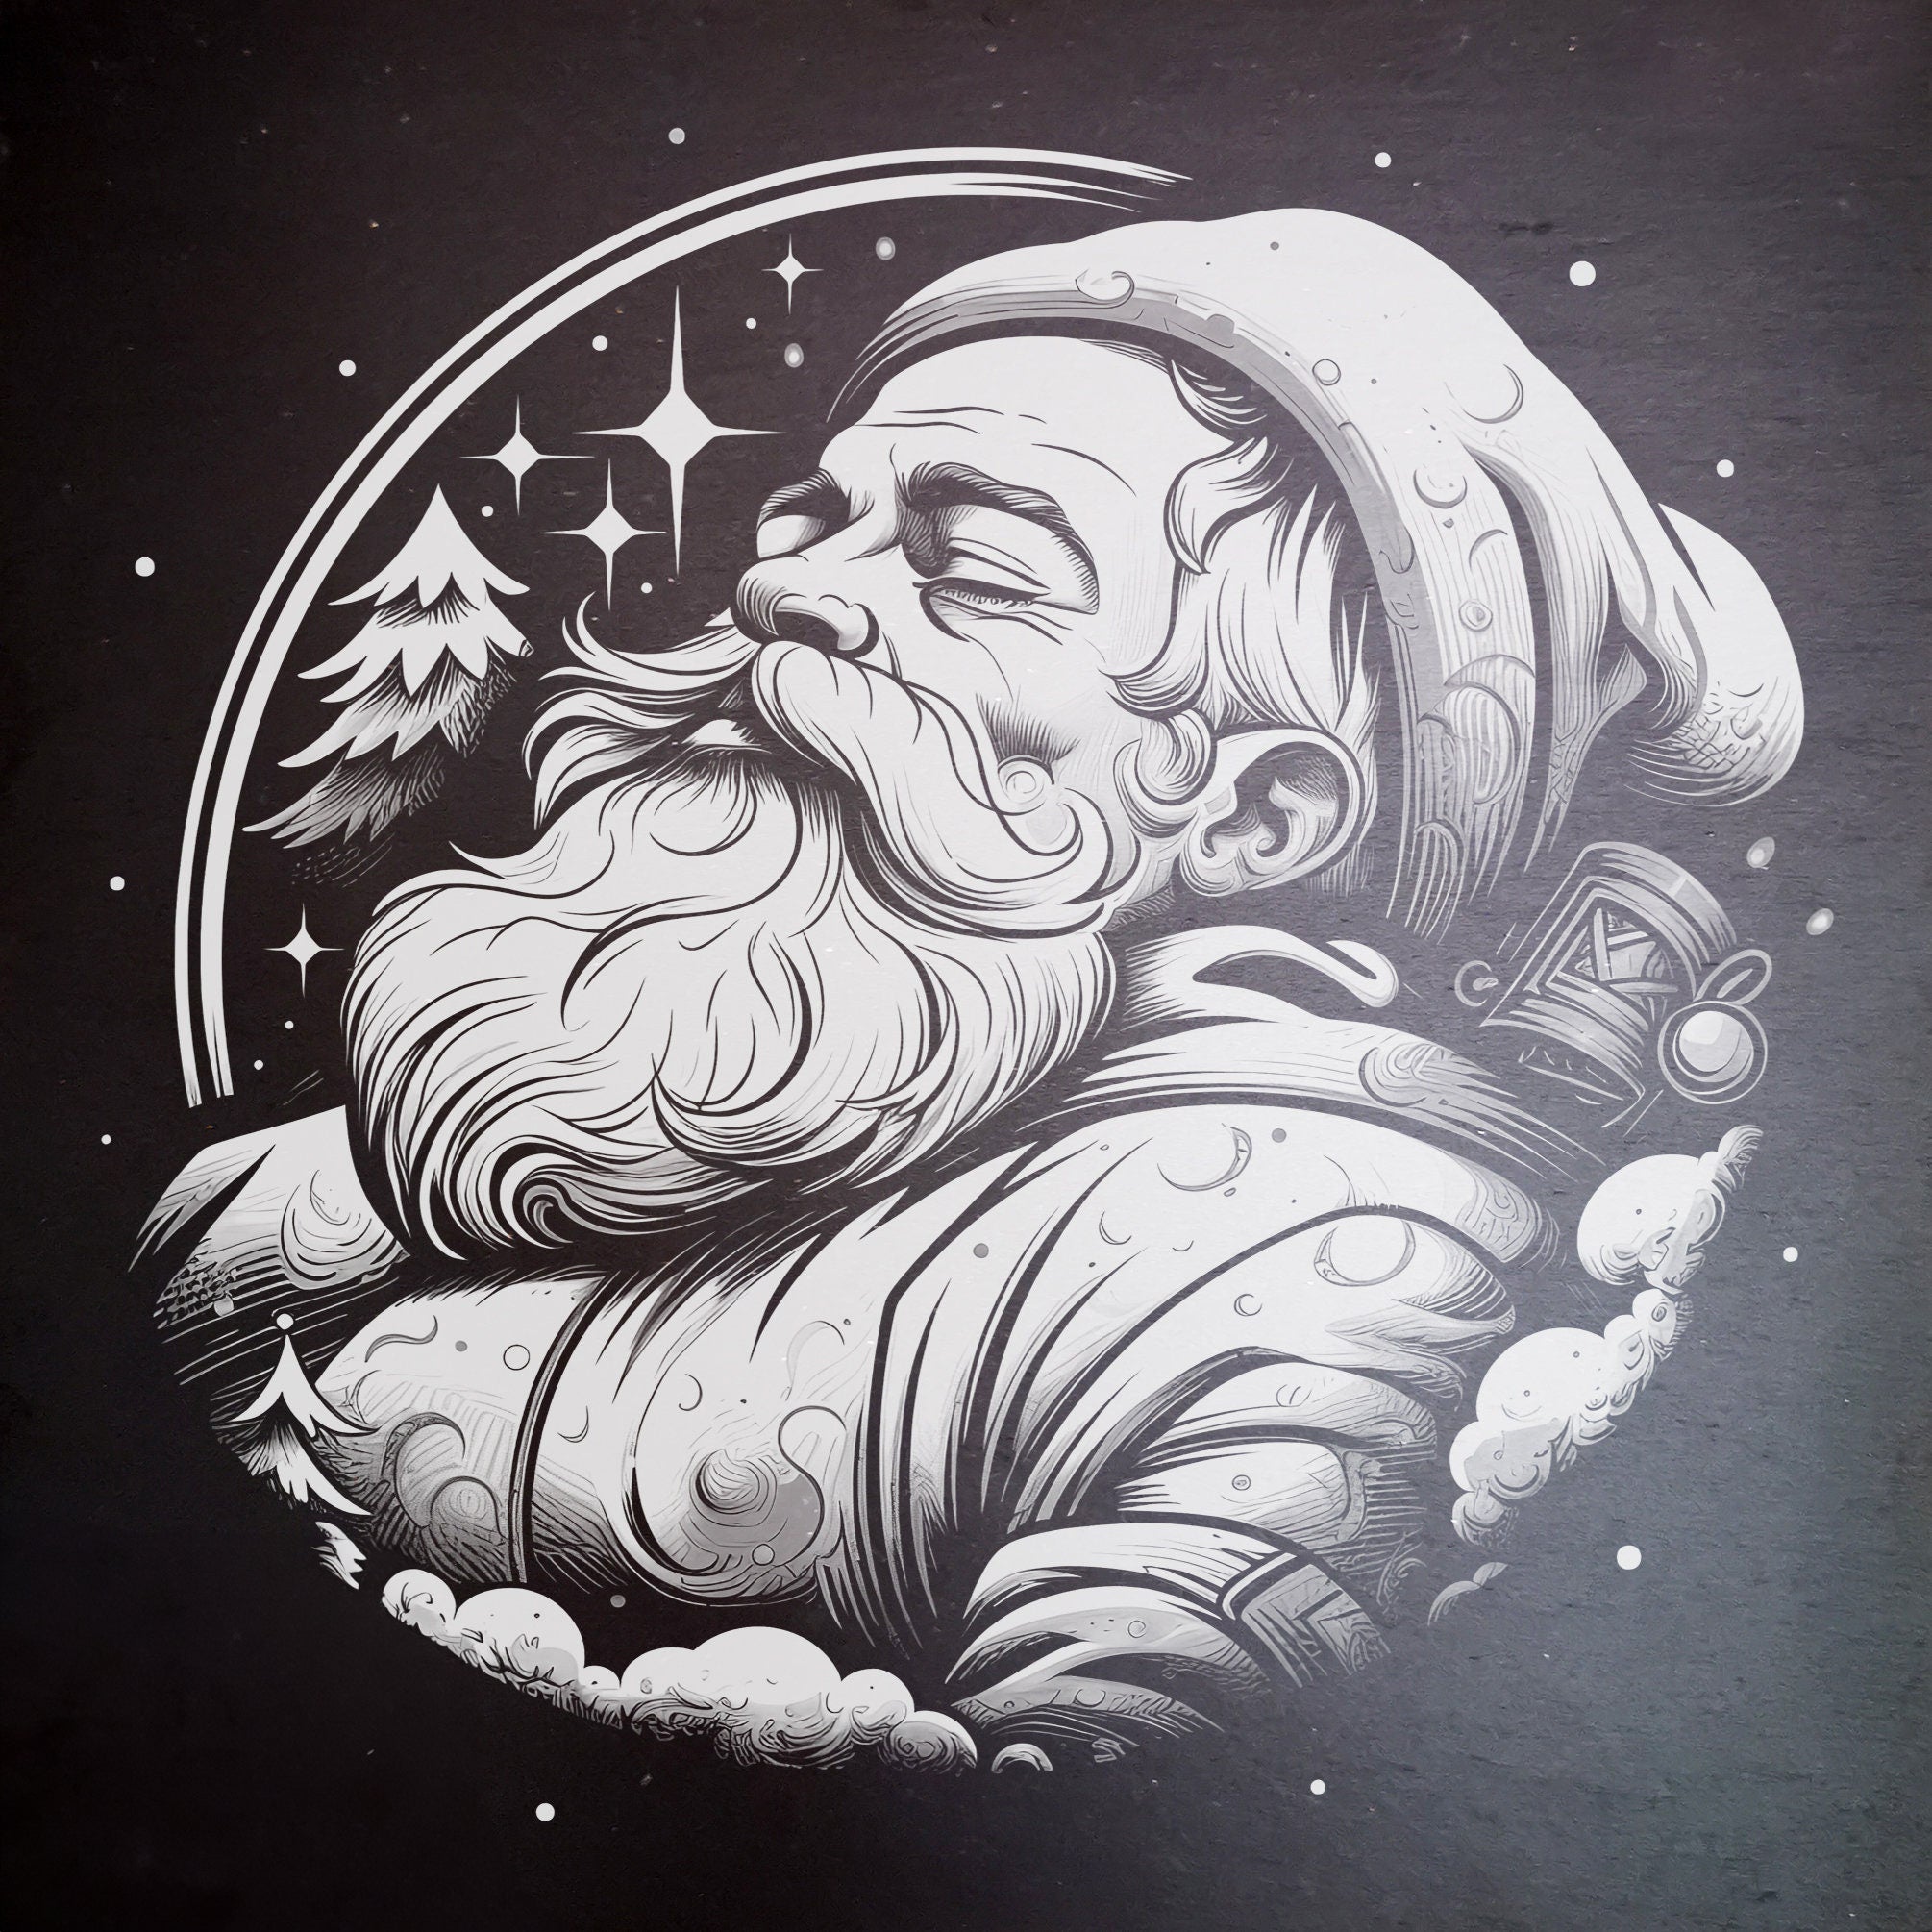 Slate - Sleeping Santa Claus